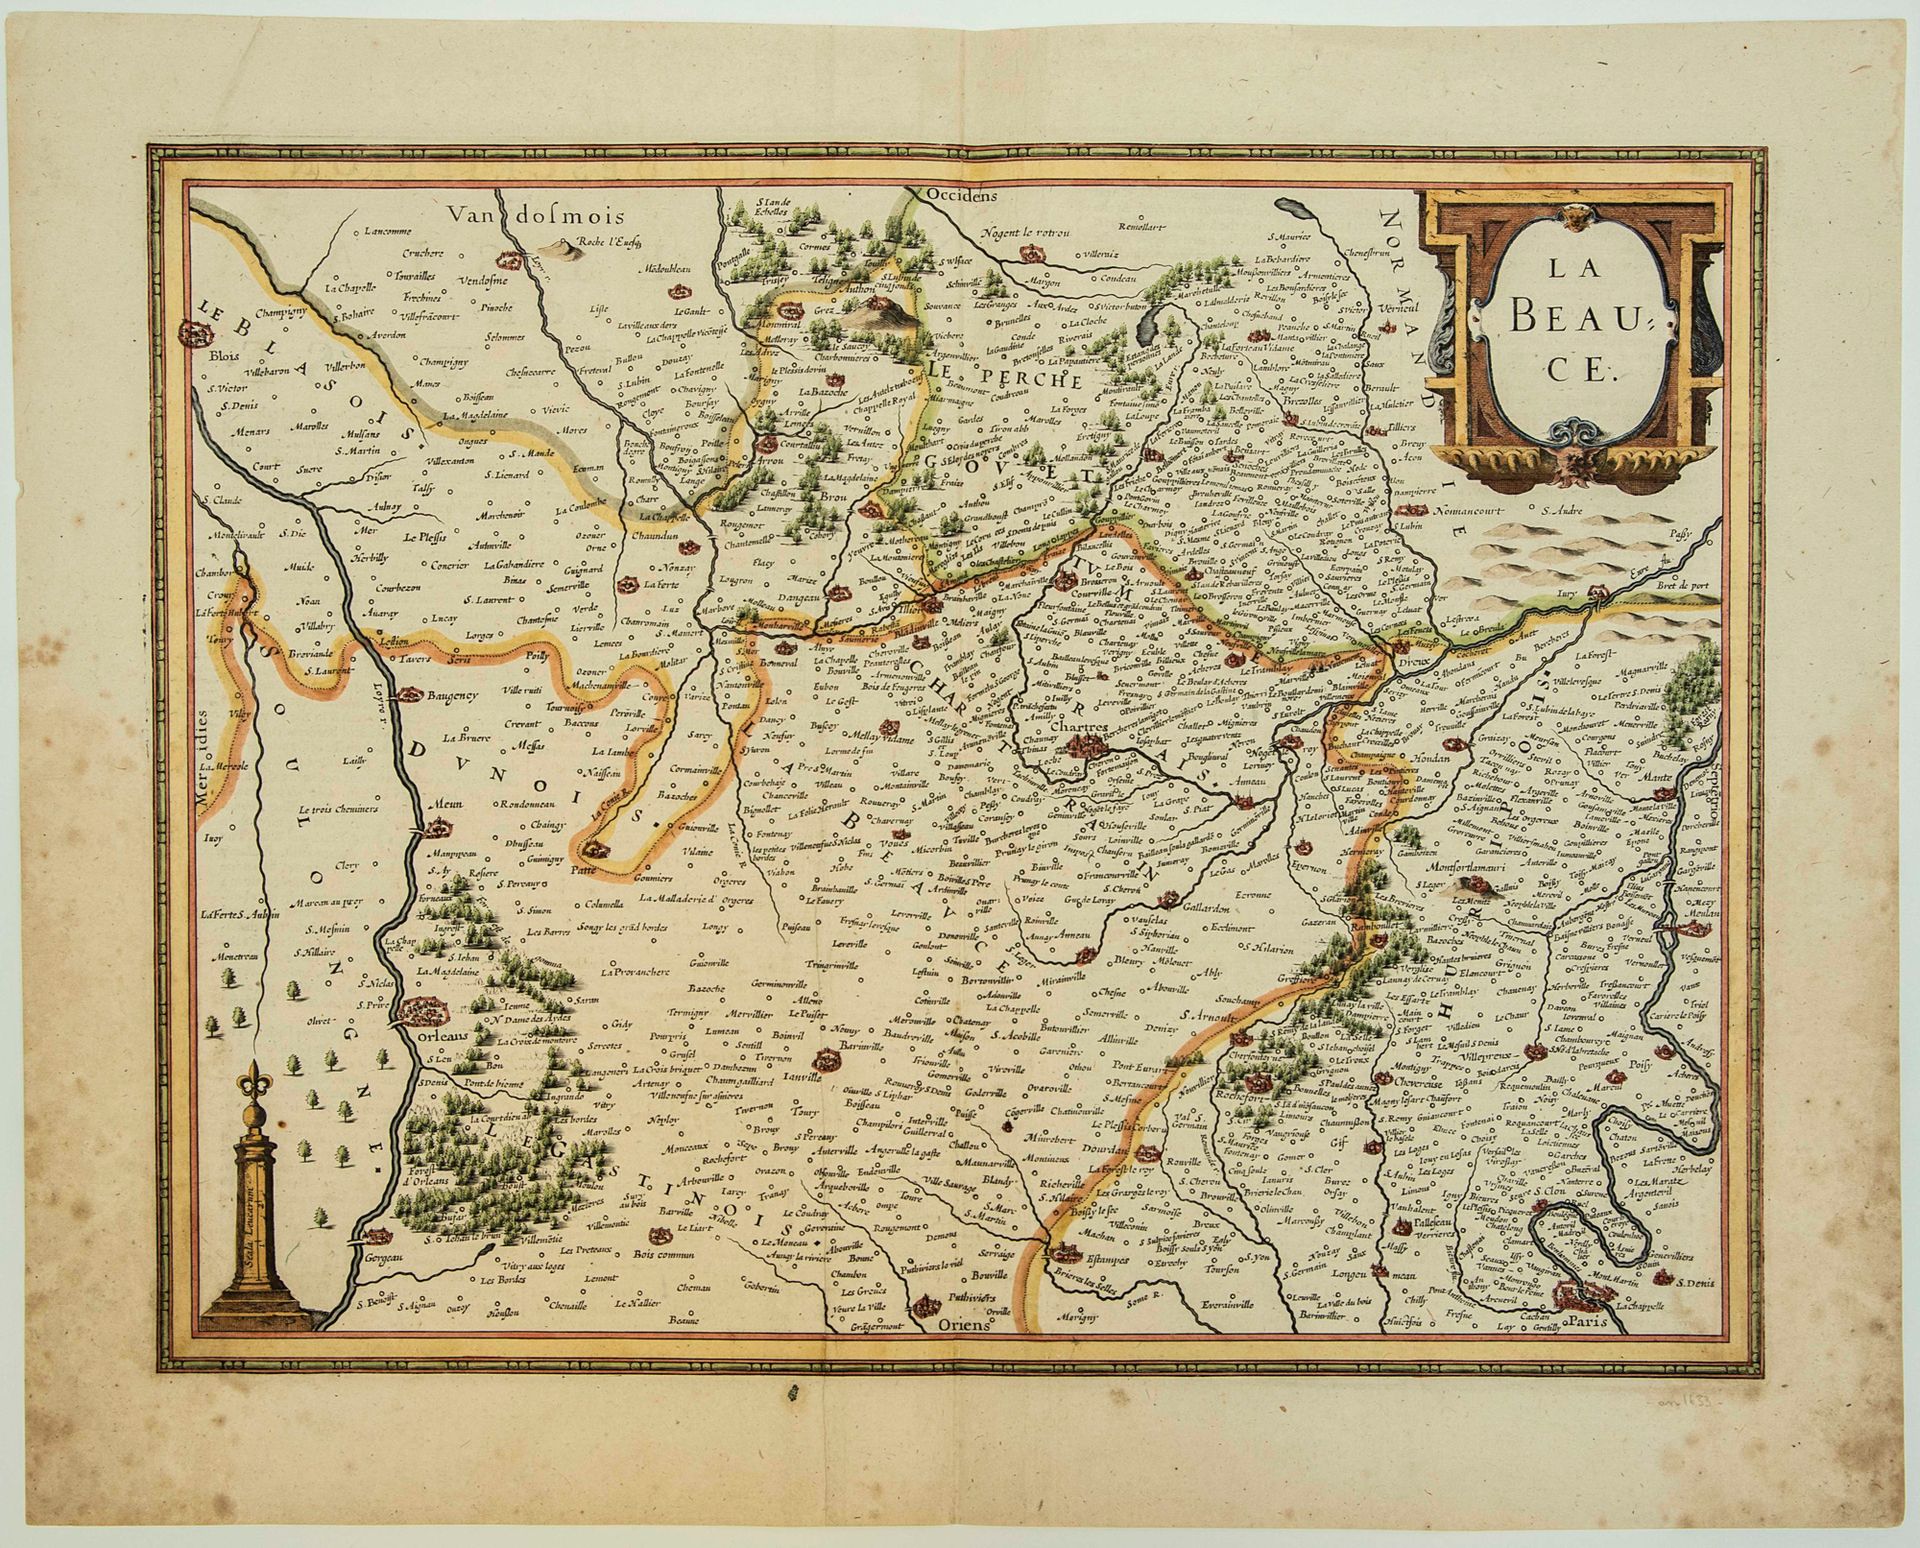 Null MAPA XVII: "LA BEAUCE" c. 1633 (Orléans, Chartres, Etampes, Rochefort, Parí&hellip;